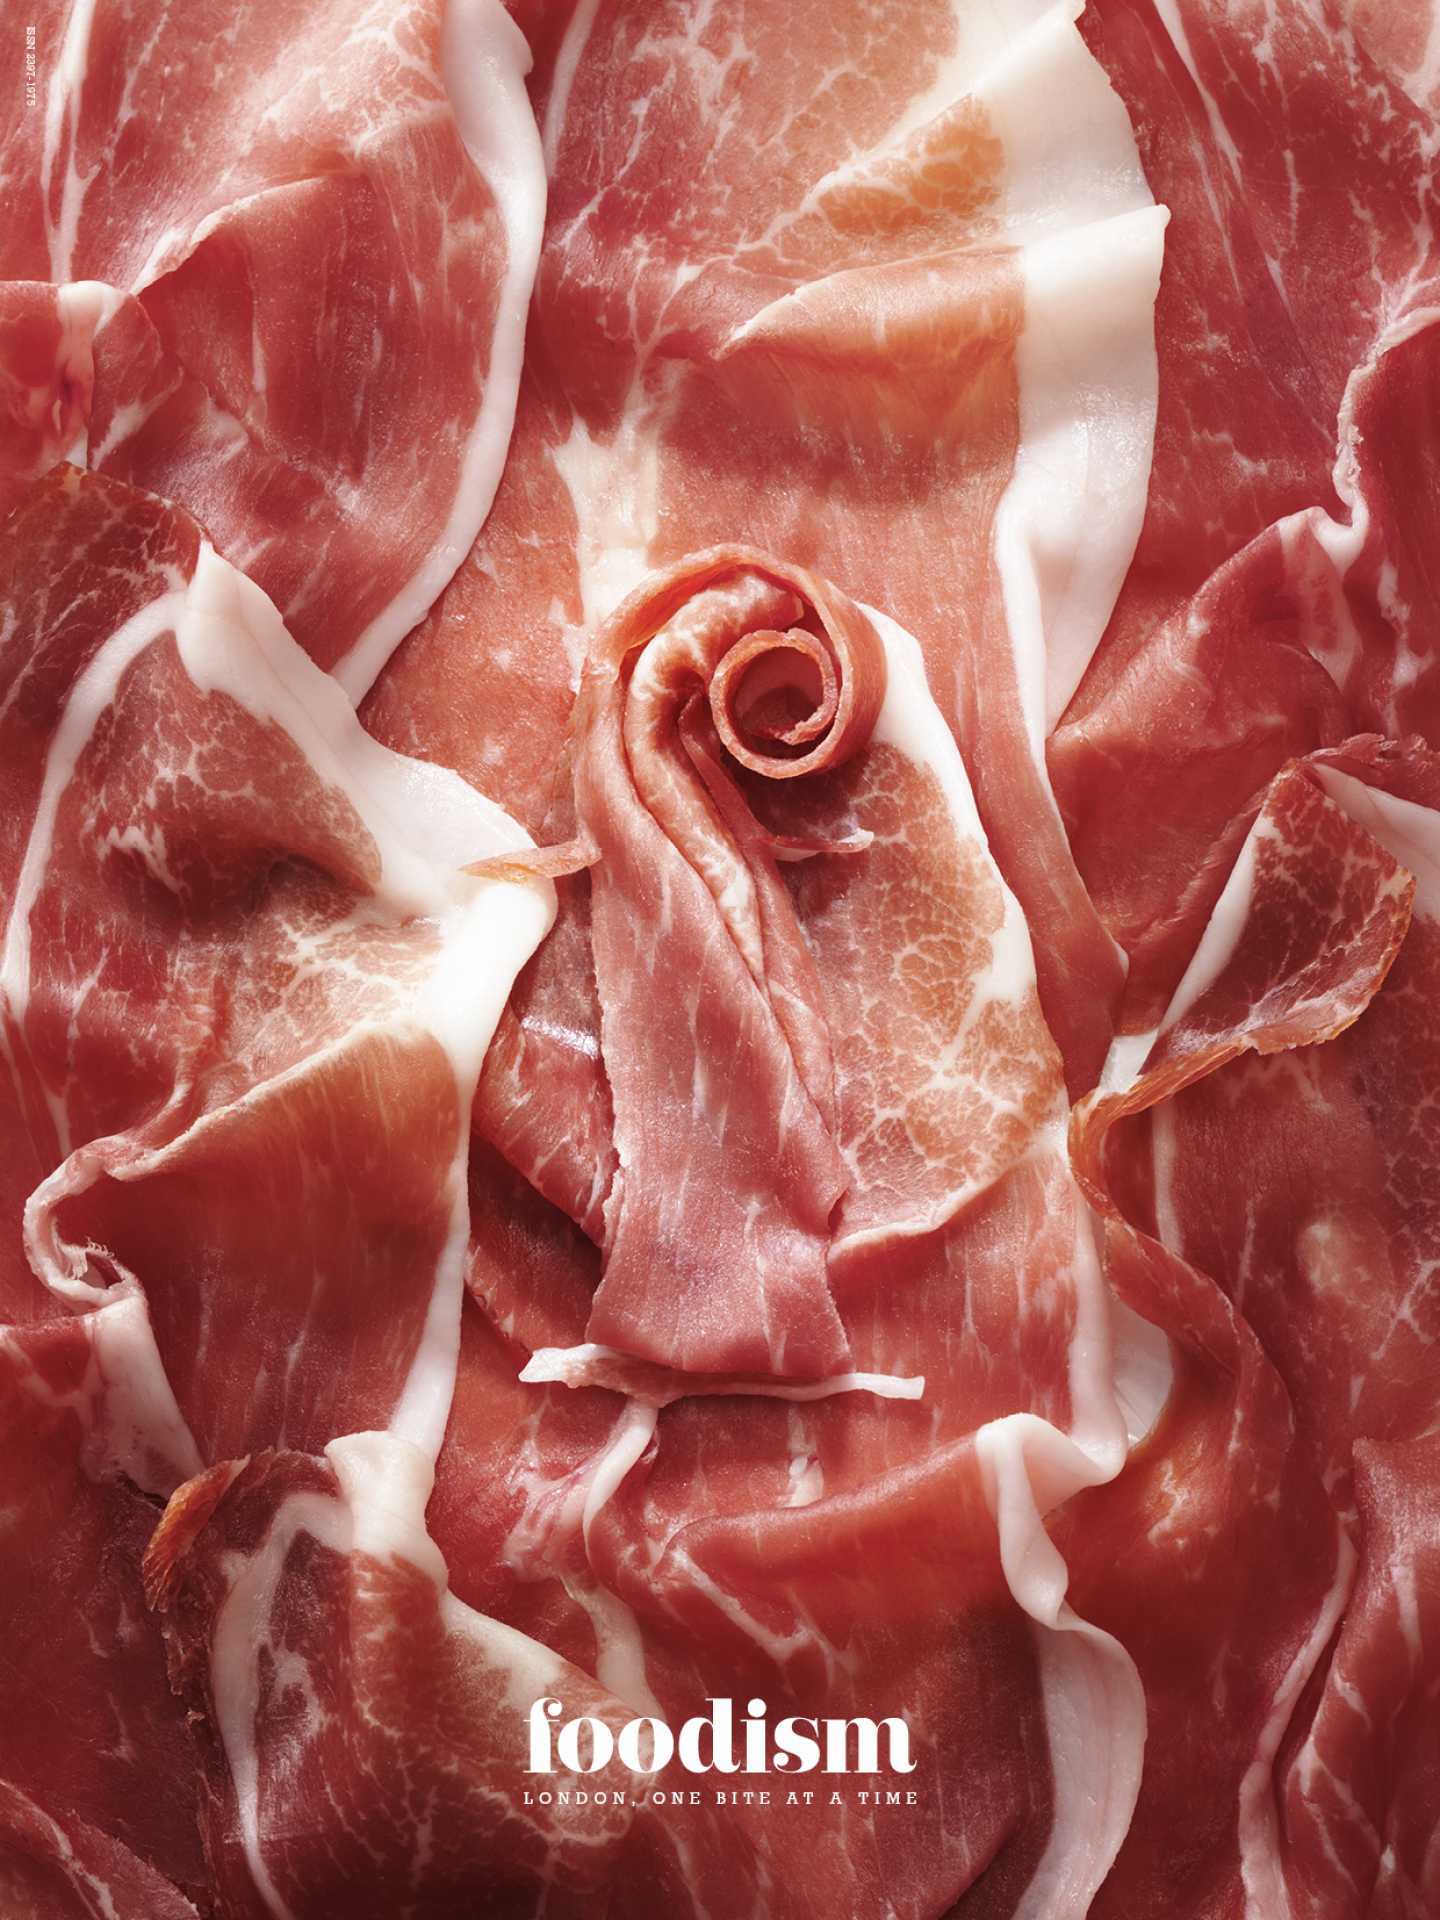 Parma Ham shot by Ian Dingle for Foodism